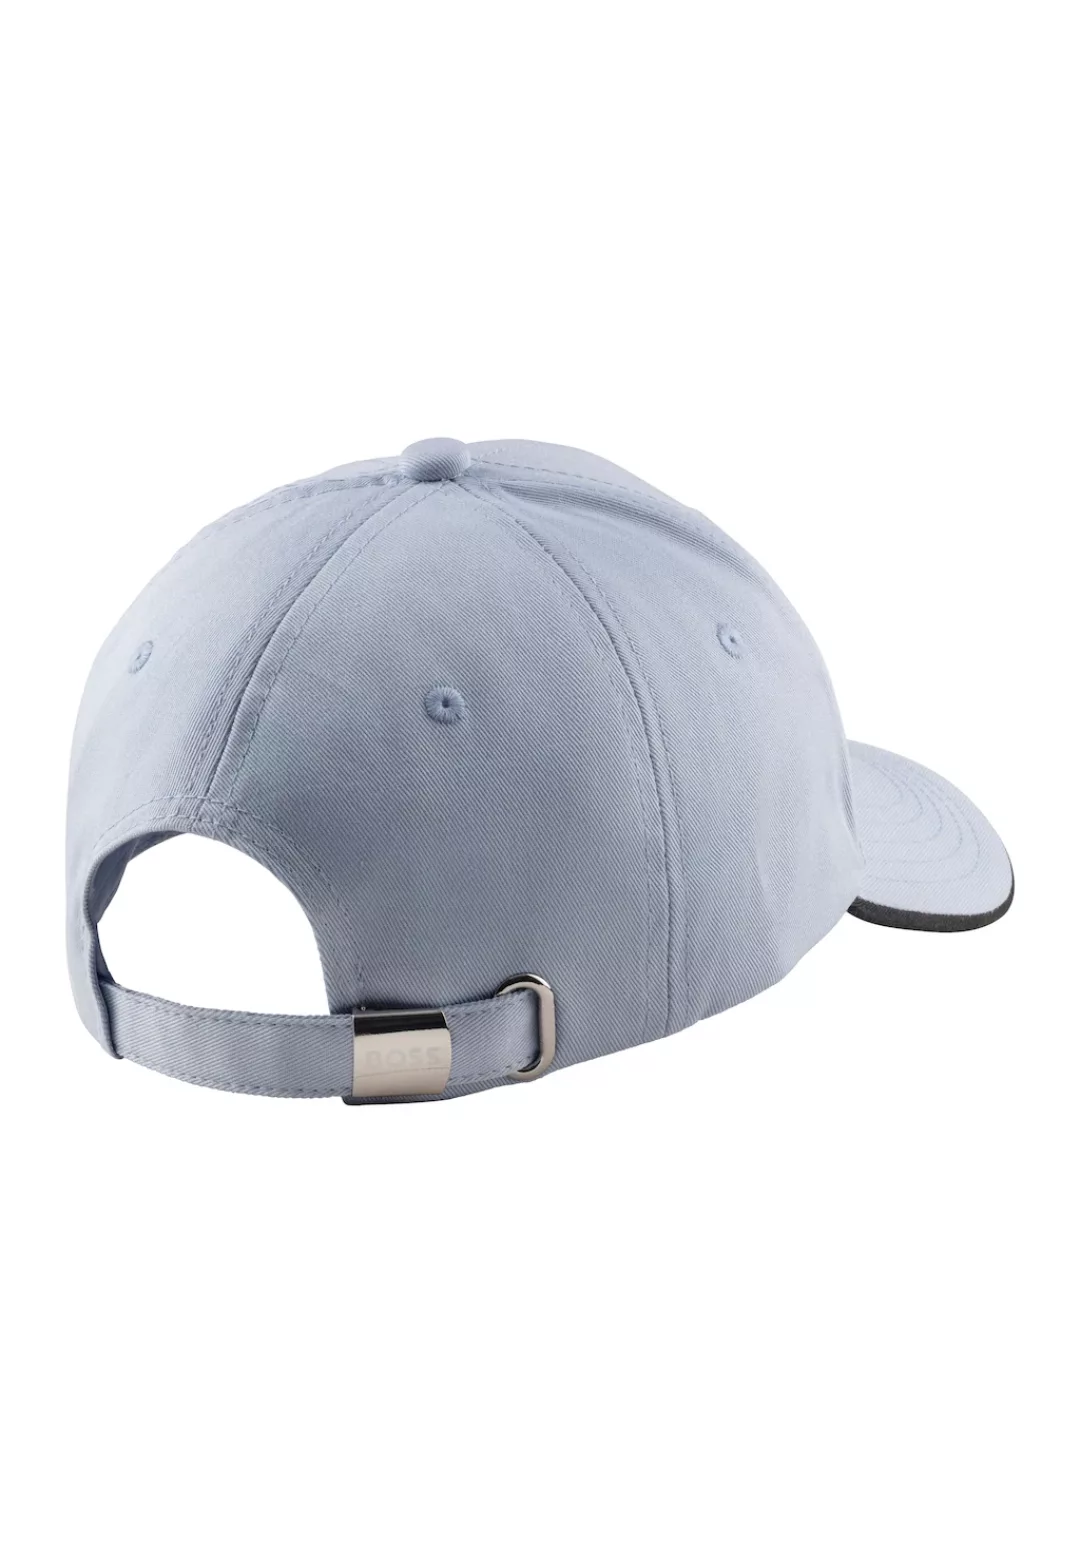 BOSS Baseball-Cap mit Logo-Print günstig online kaufen